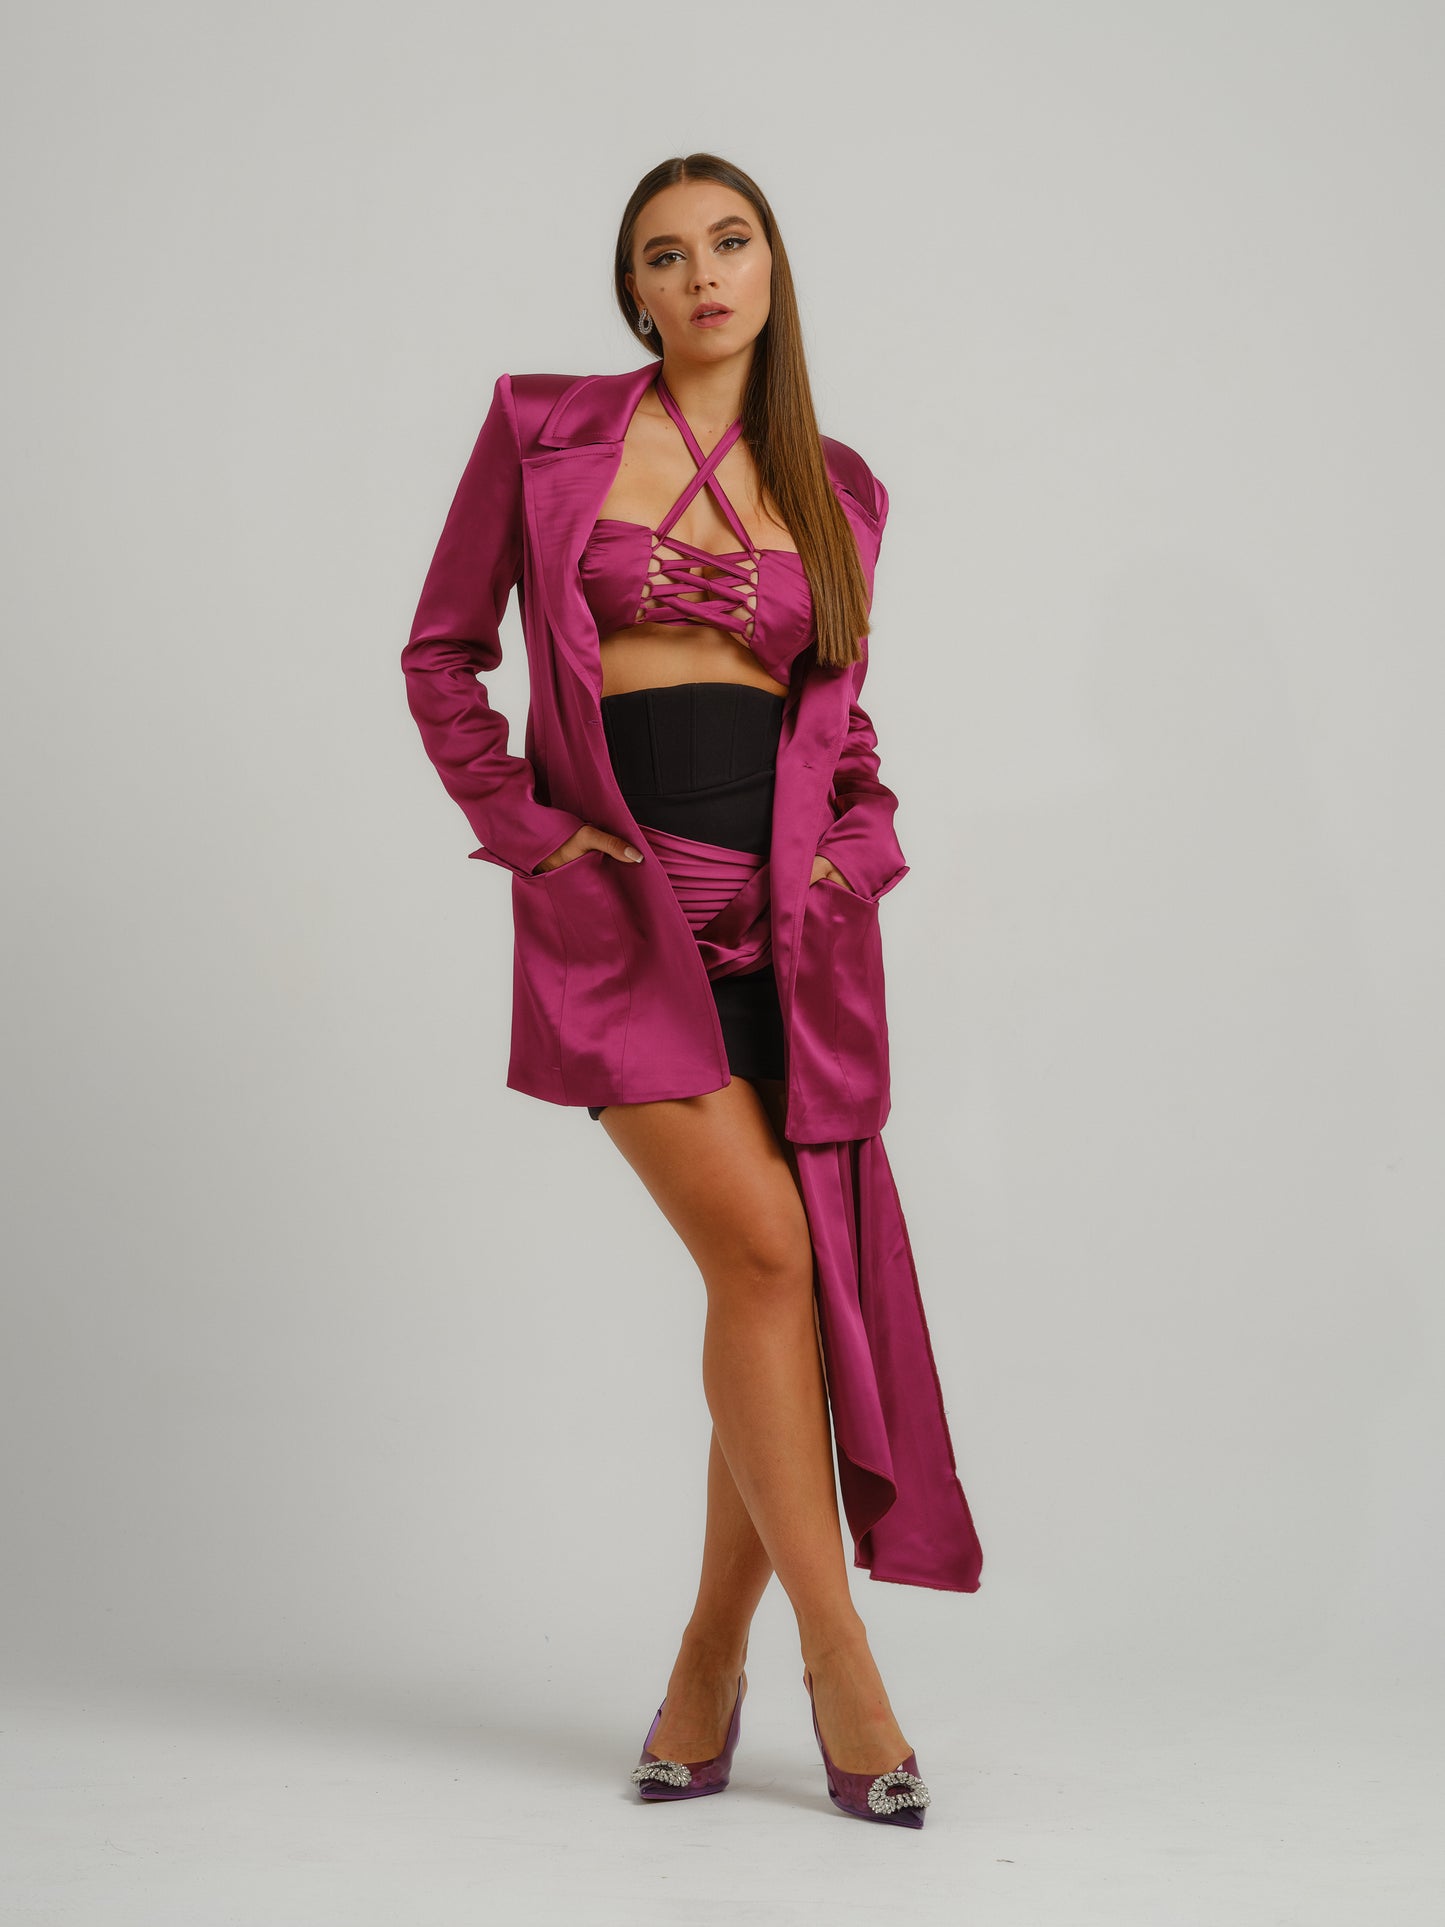 Midnight Sky Hourglass Blazer - Magenta Haze by Tia Dorraine Women's Luxury Fashion Designer Clothing Brand